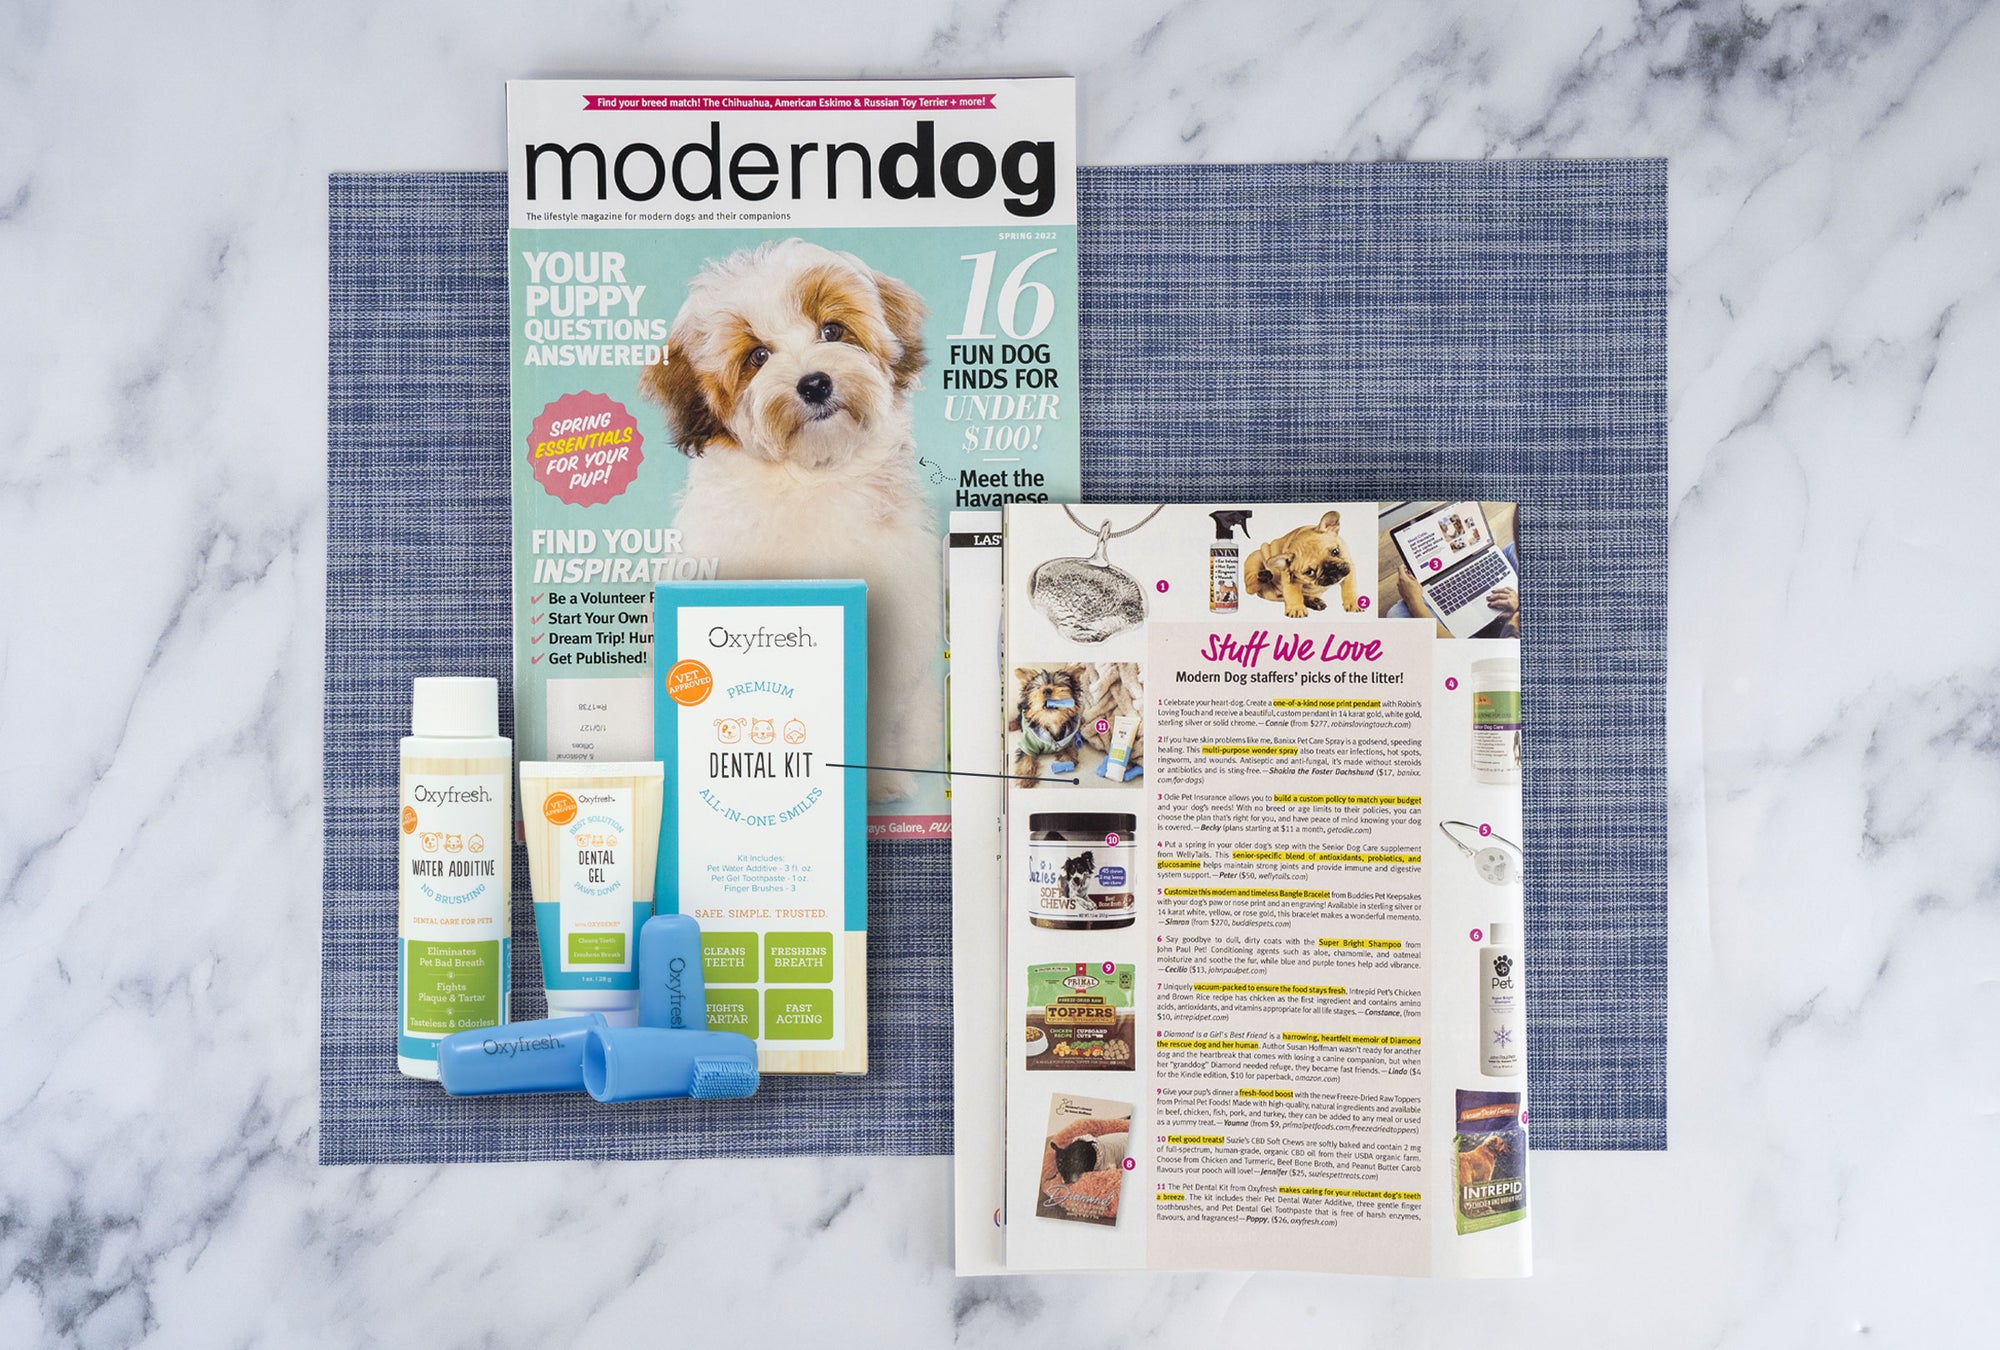 oxyfresh pet dental kit next to article in Modern Dog magazine